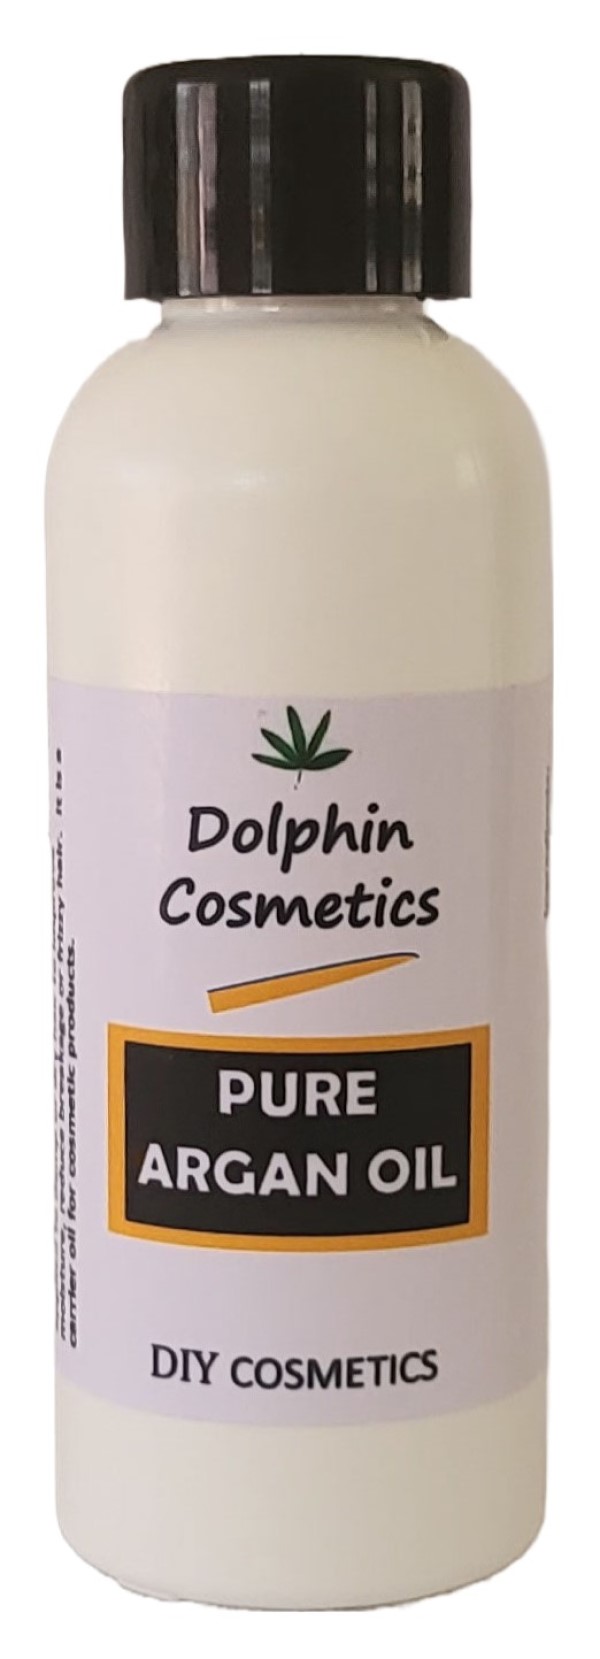 dolphin-cosmetics-argan-oil-